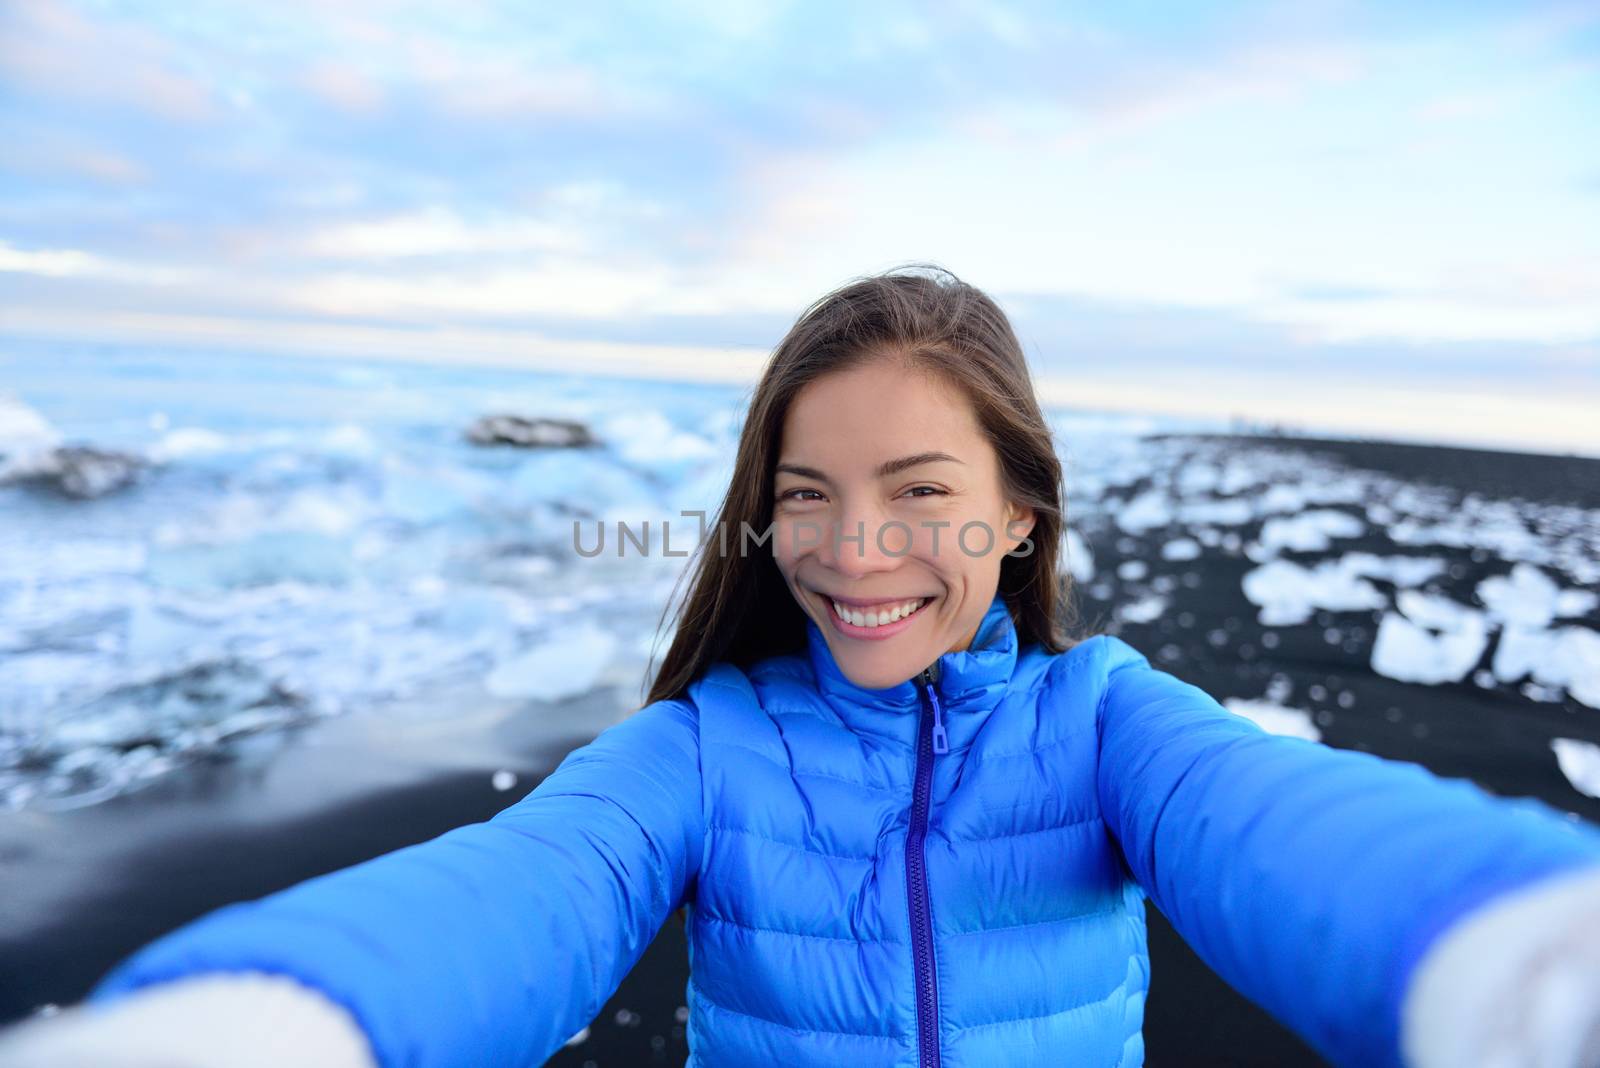 Adventure selfie by trave explorer woman on Iceland Diamond Beach. Woman tourist in amazing landscape Ice beach, Breidamerkursandur by jokulsarlon glacial lagoon / glacier lake nature by Maridav